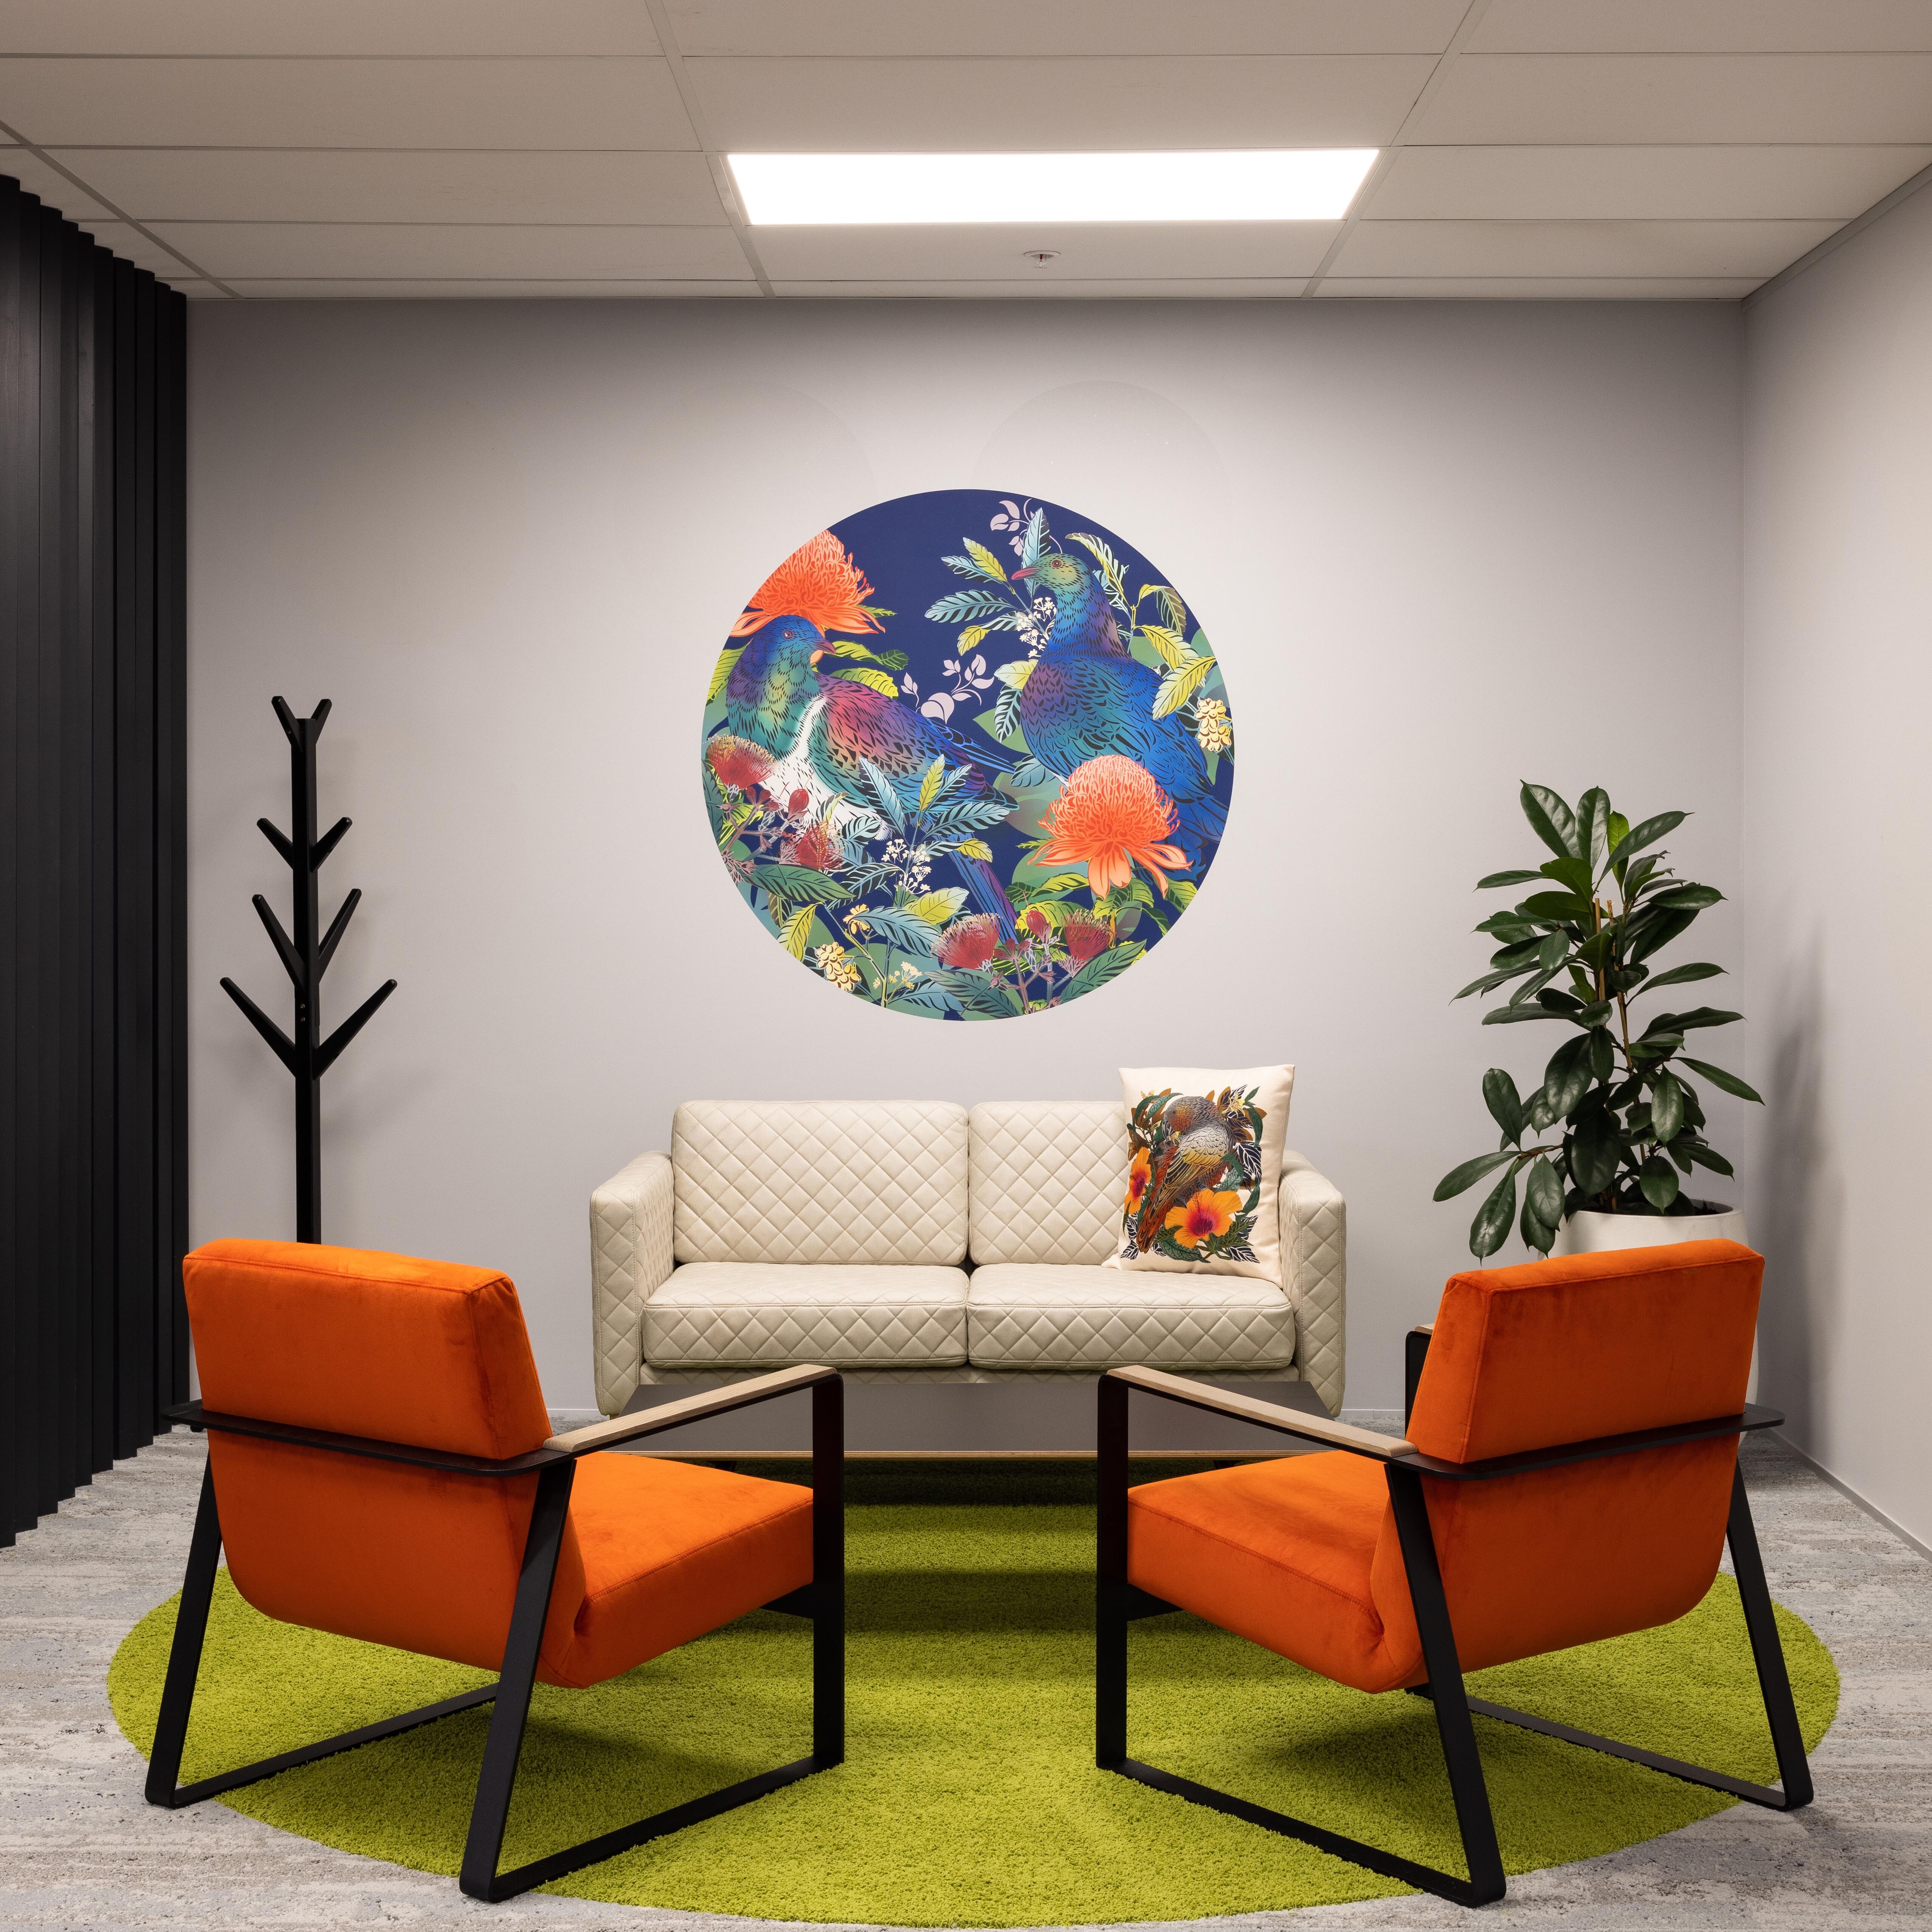 NZ made lounge furniture for the NZ business - Centrix